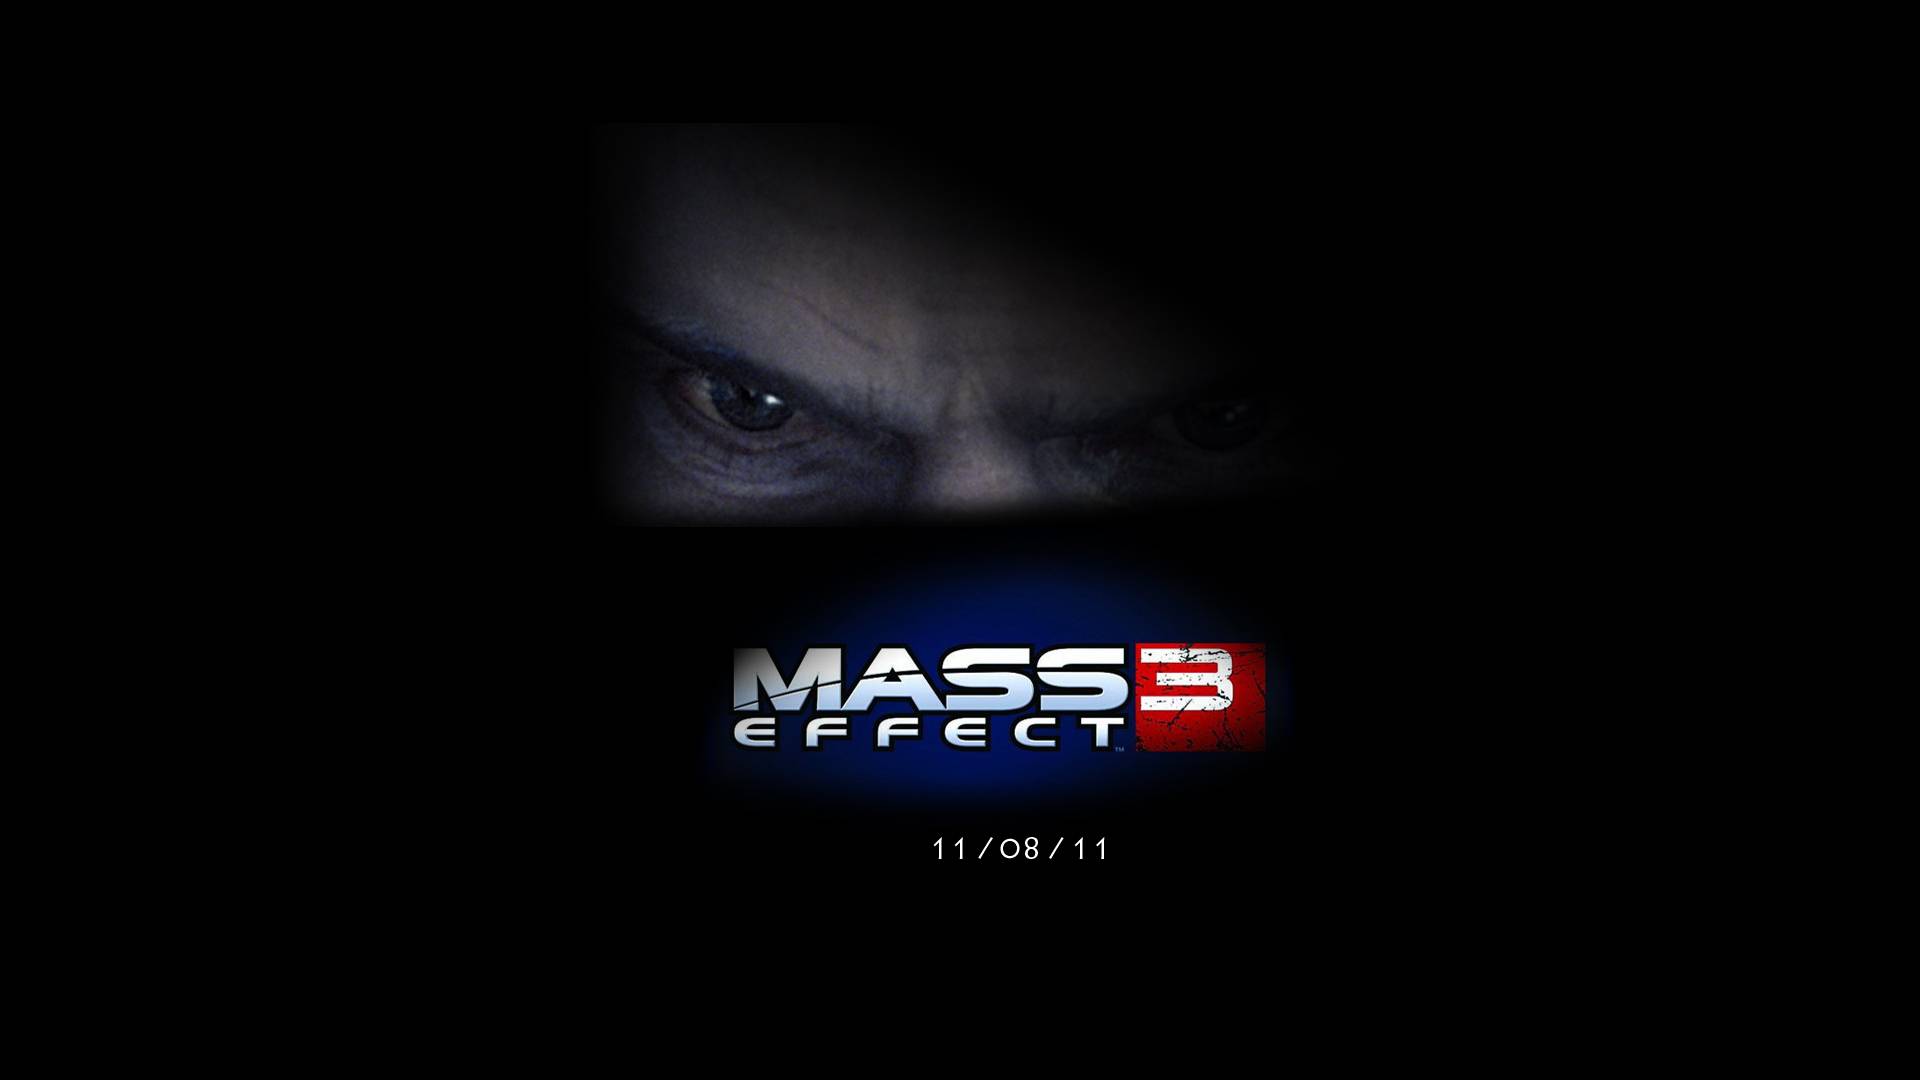 Mass Effect 3 Wallpaper in full 1080P HD « GamingBolt.com: Video